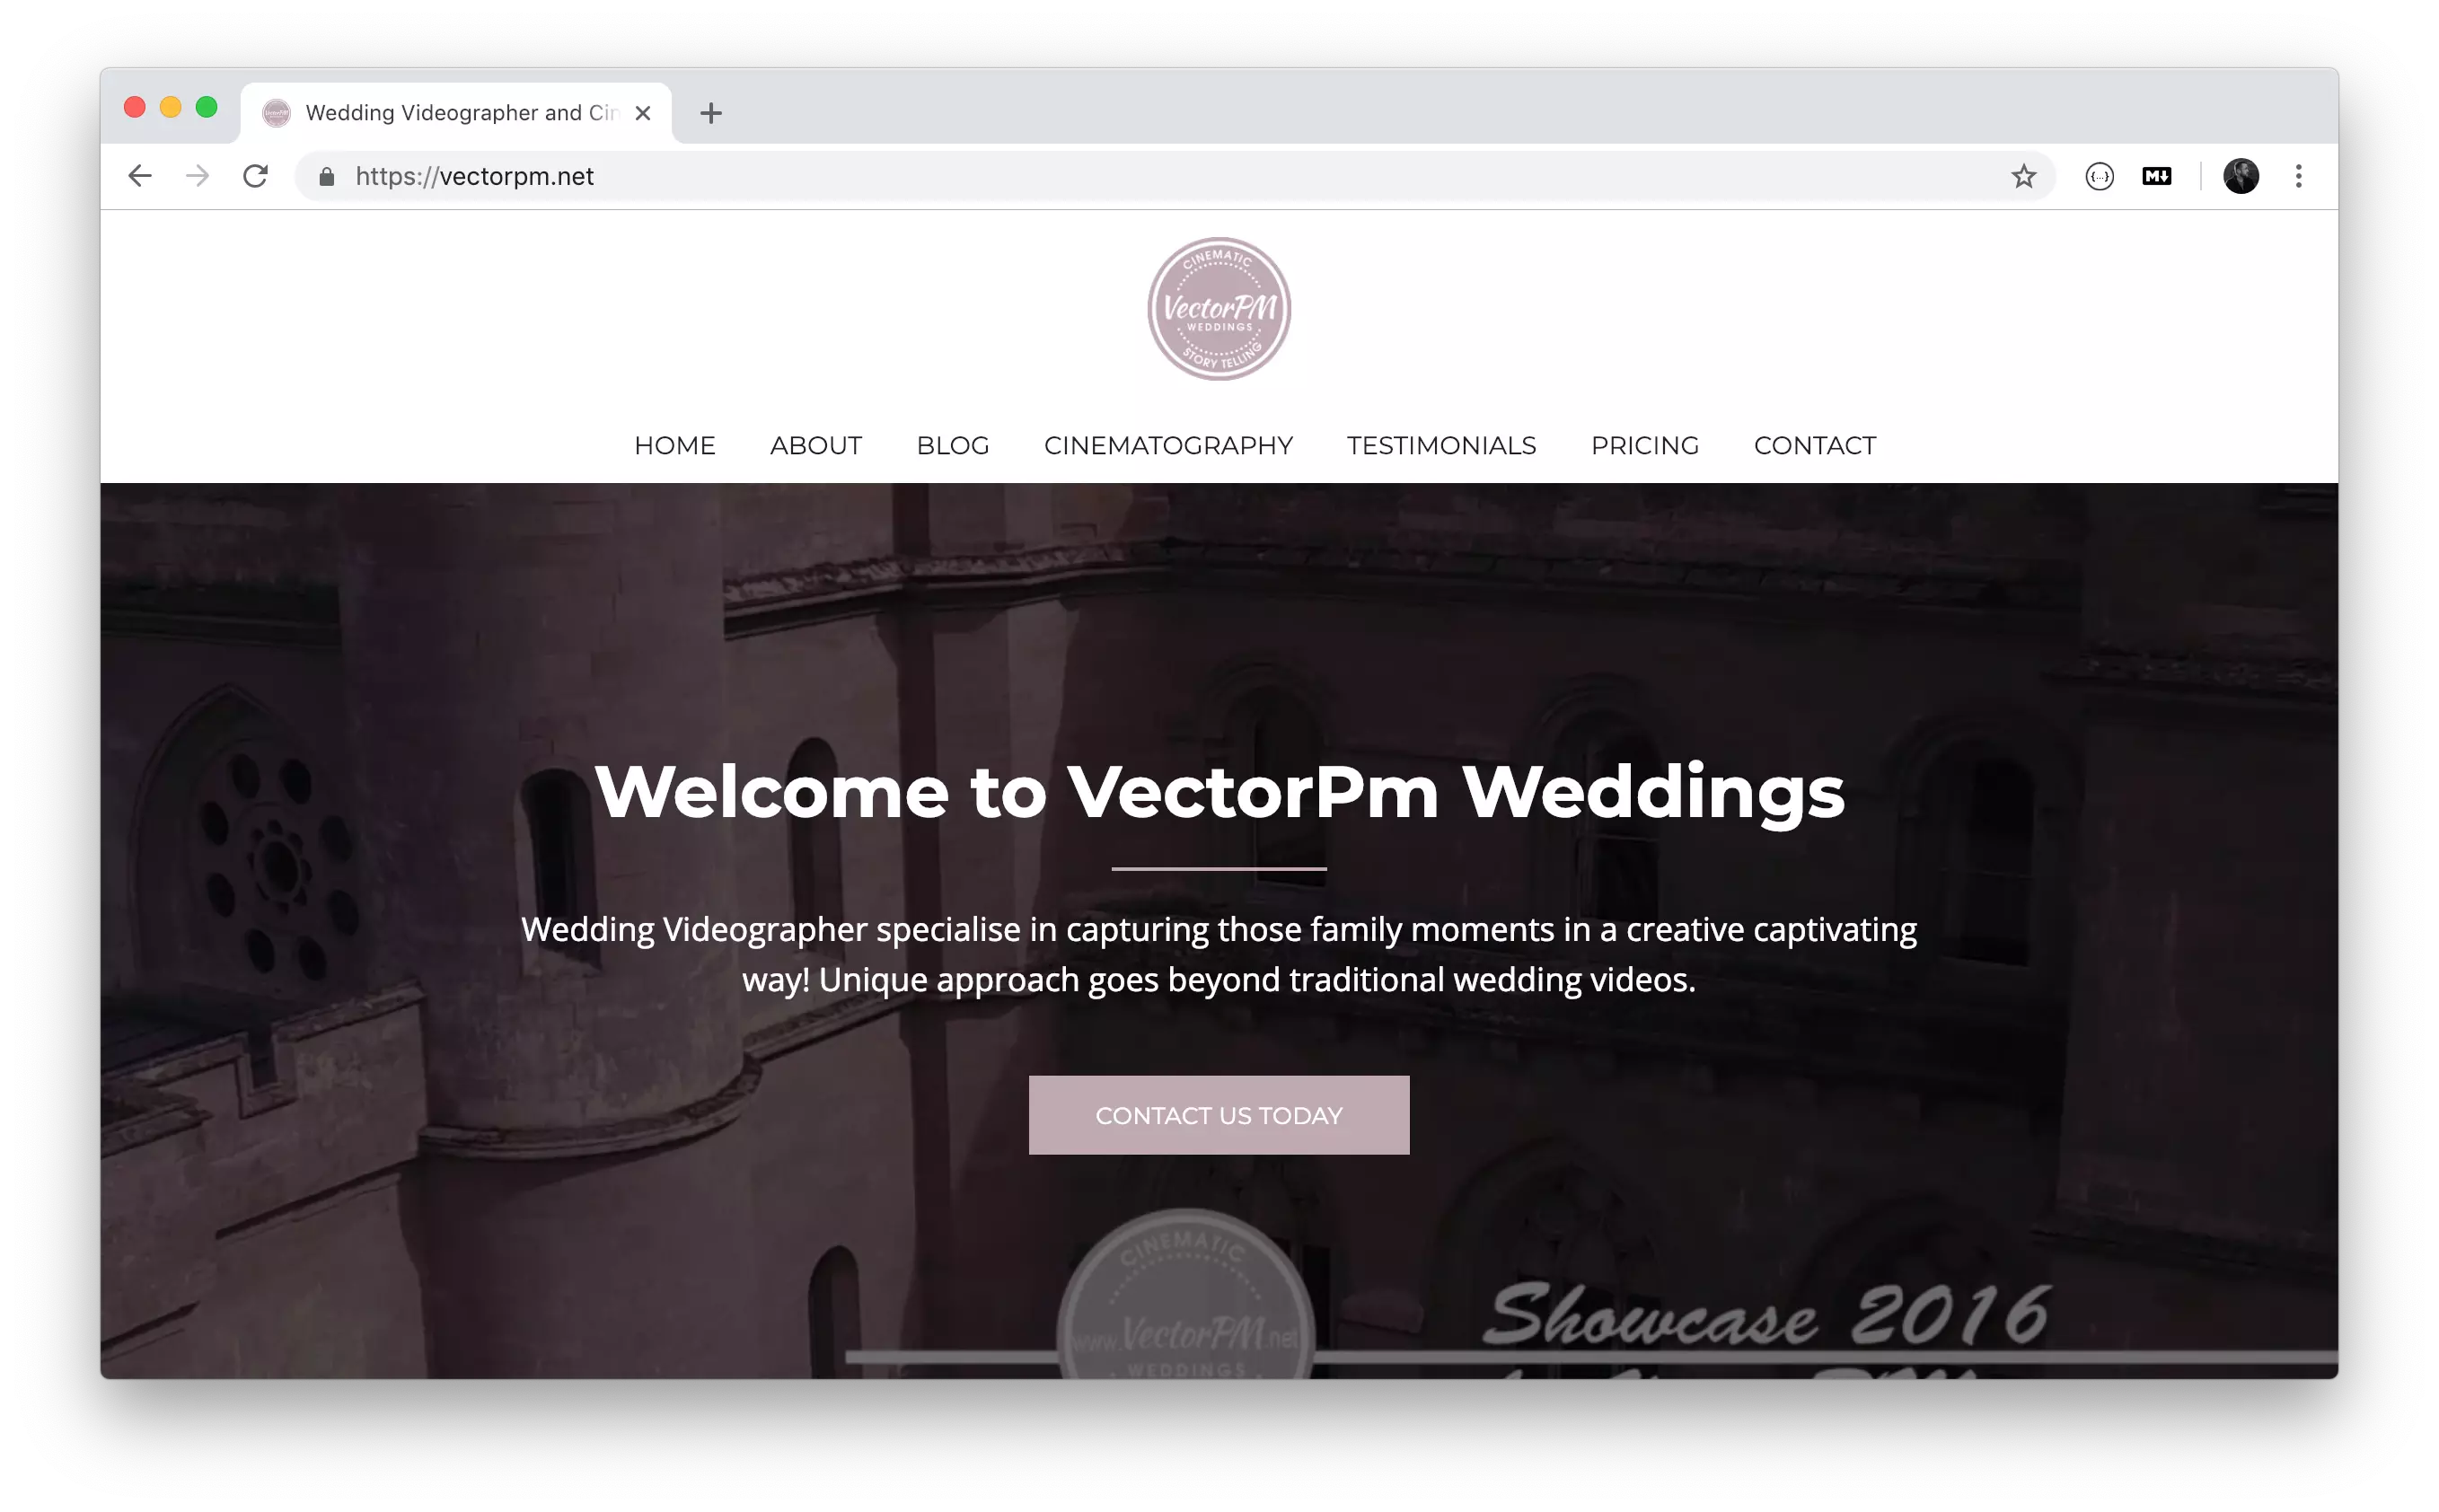 Wedding Videographer and Cinematographer - VectorPm.net